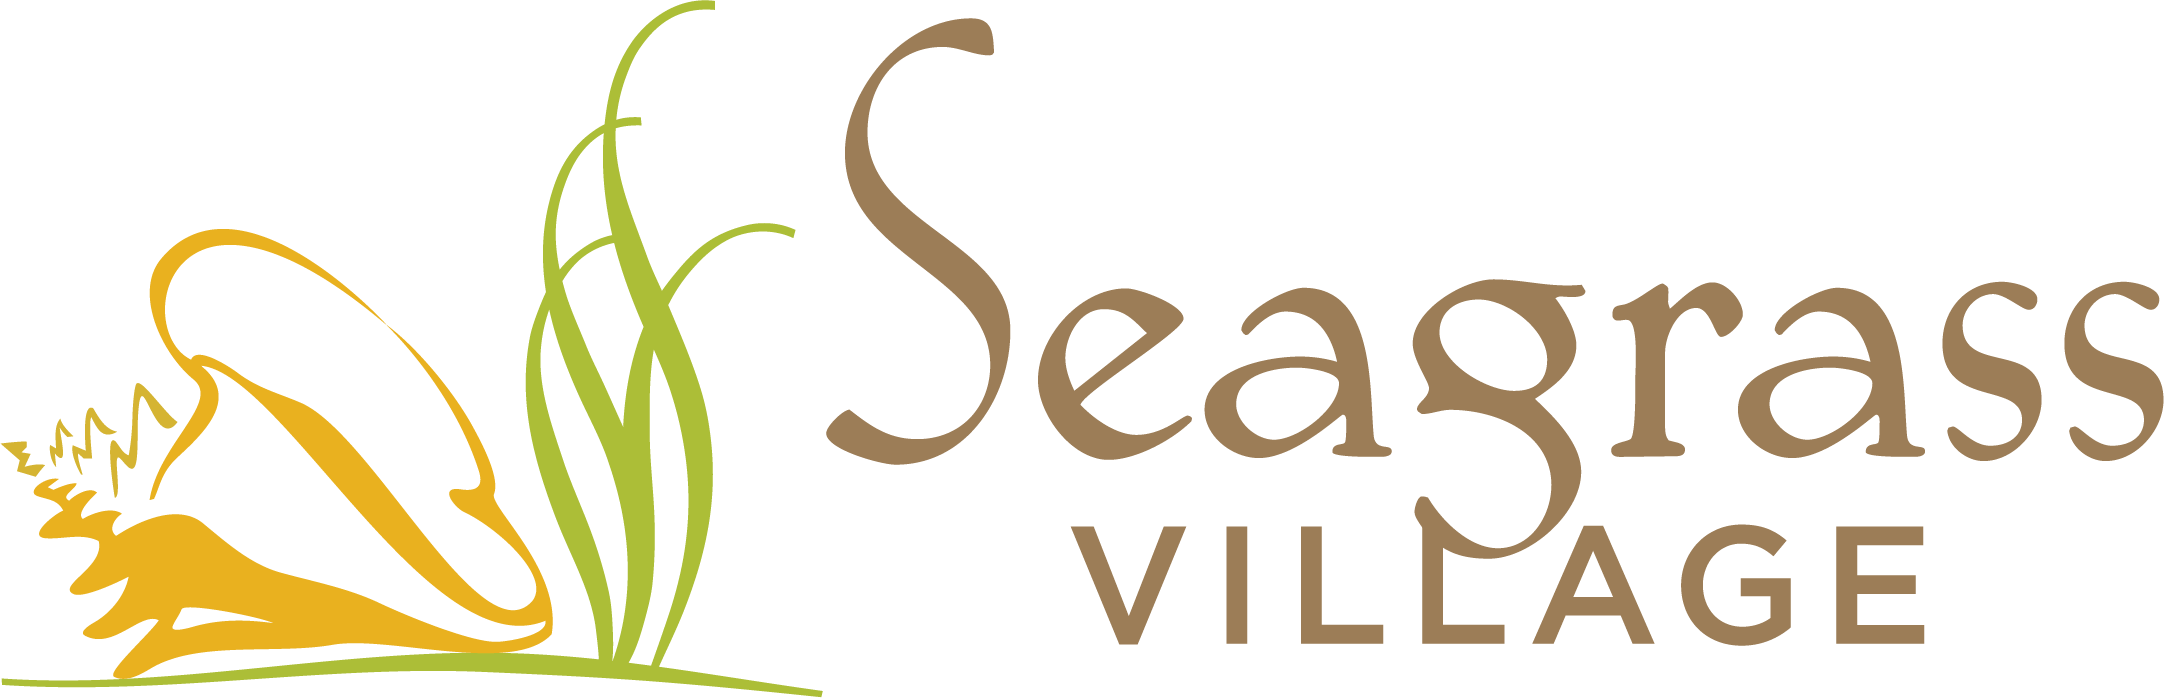 Seagrass Village of PCB Home